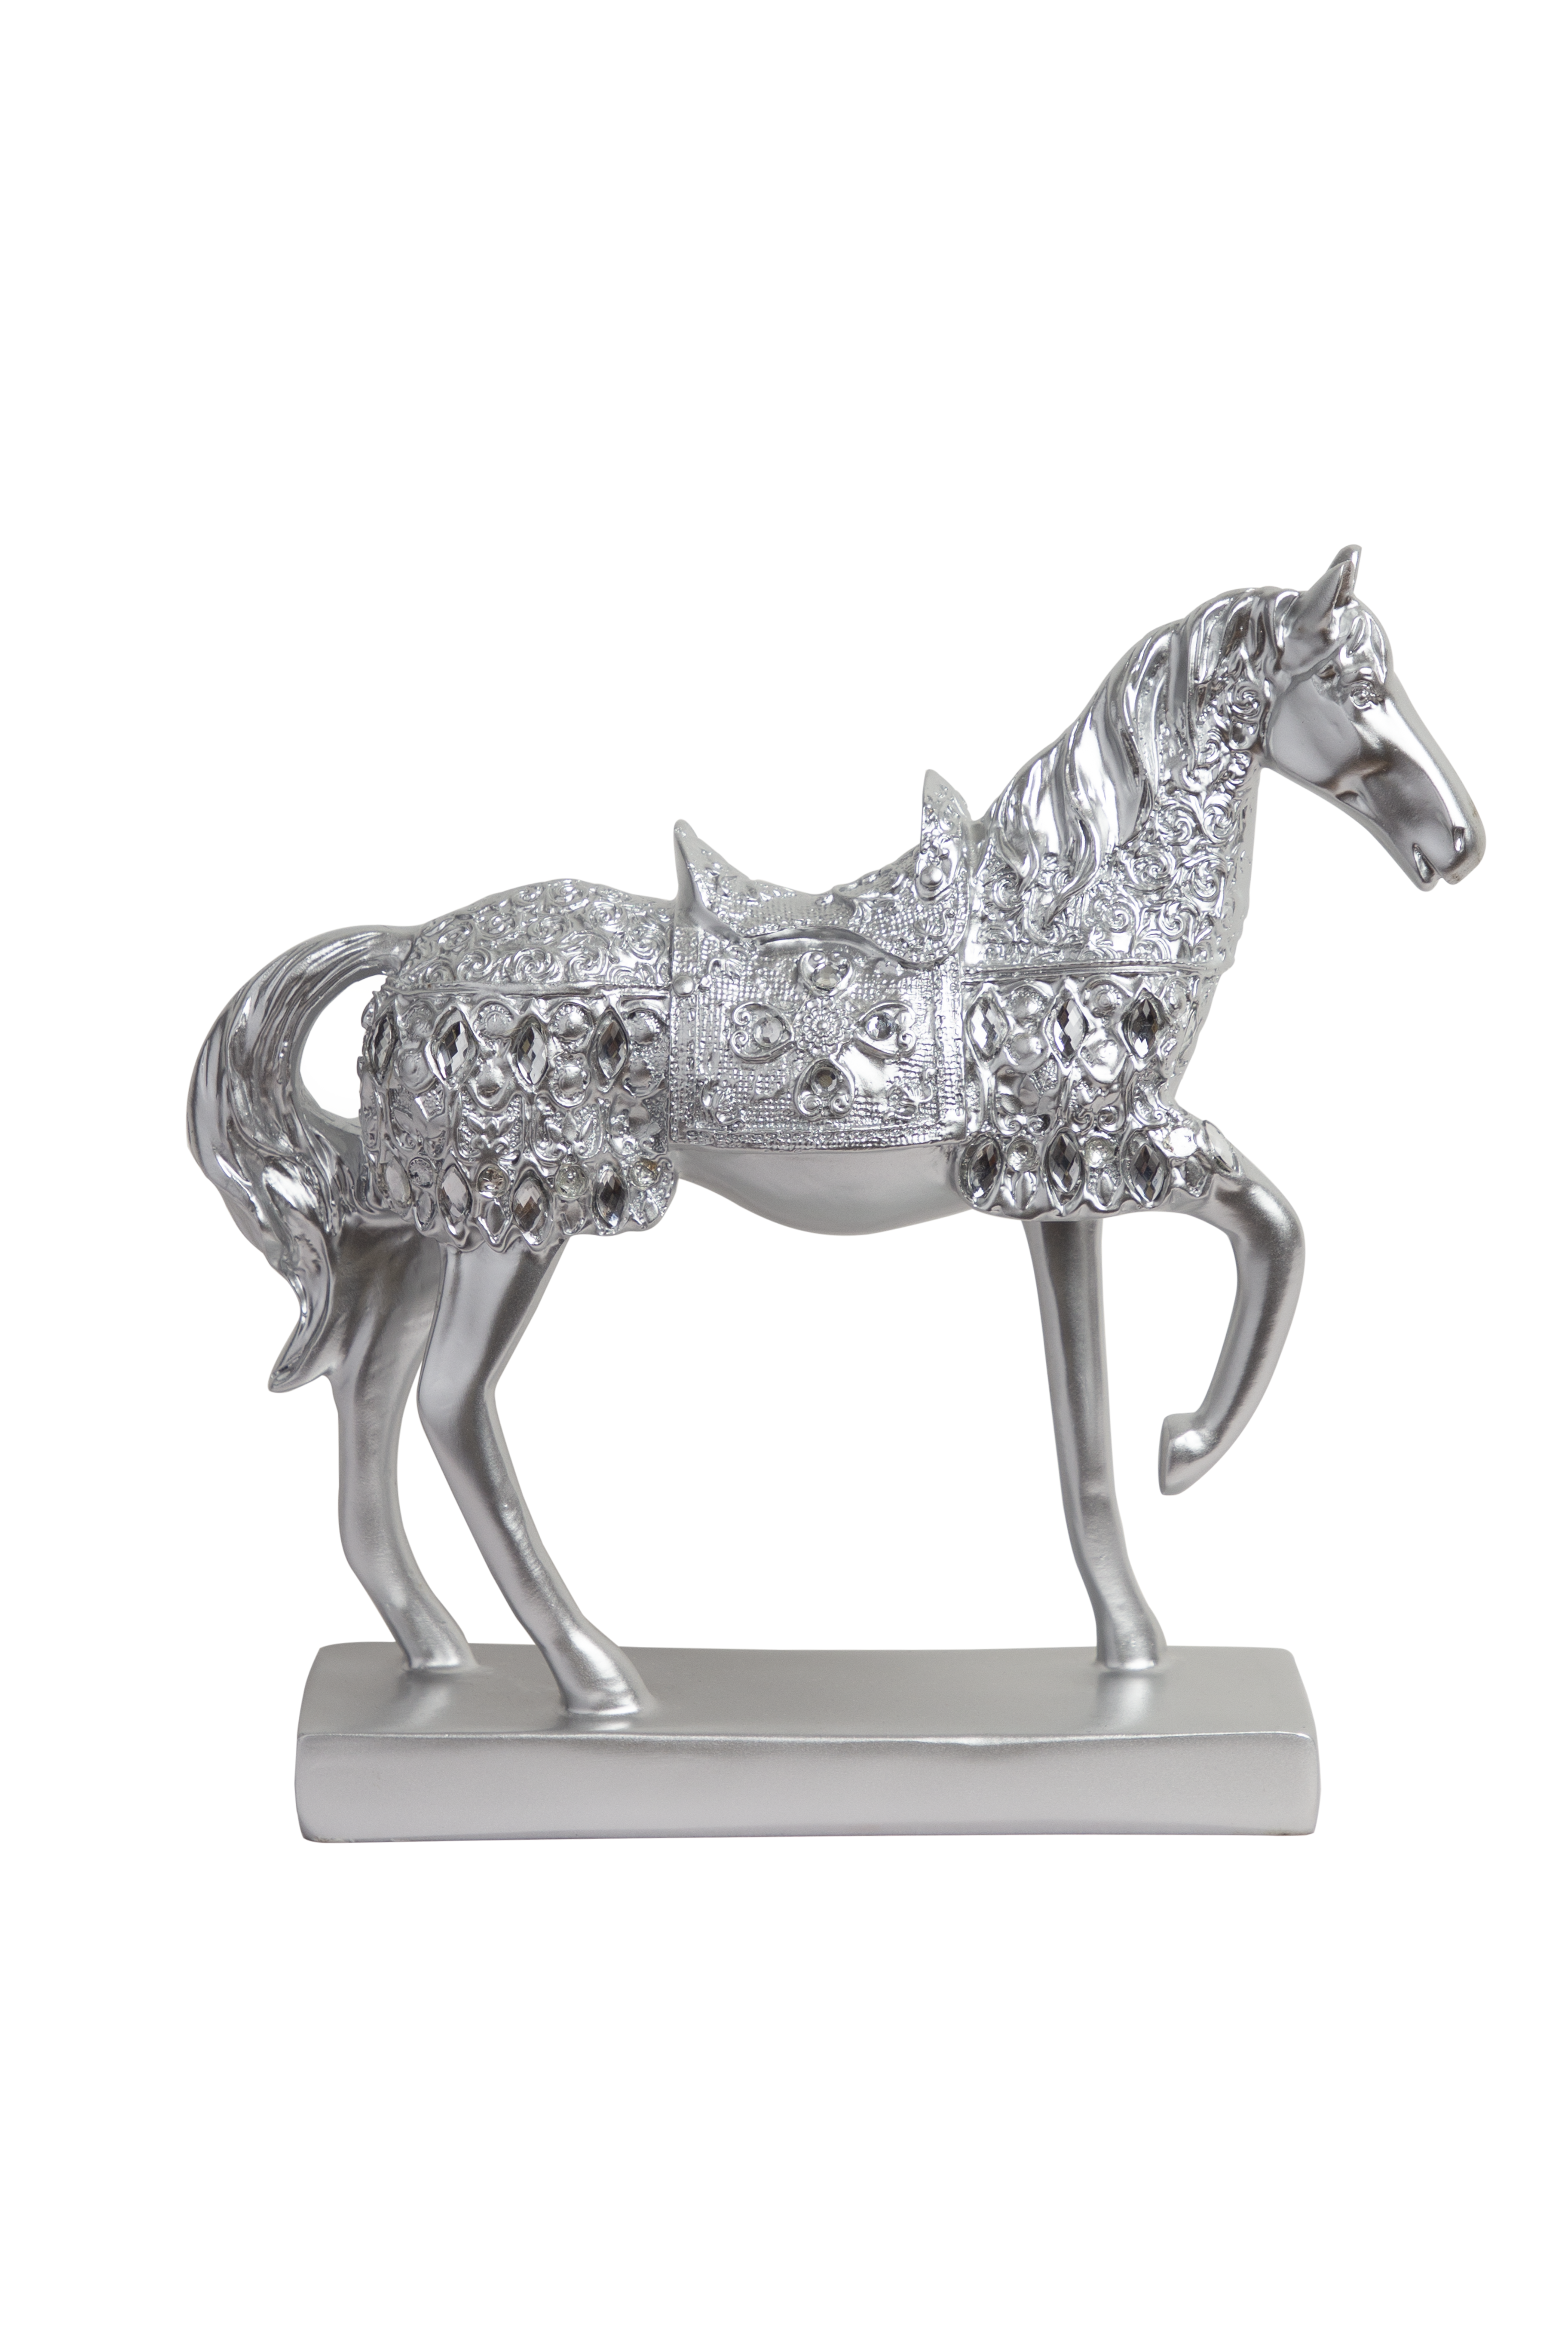 Nostalgia Intricate Silver Horse